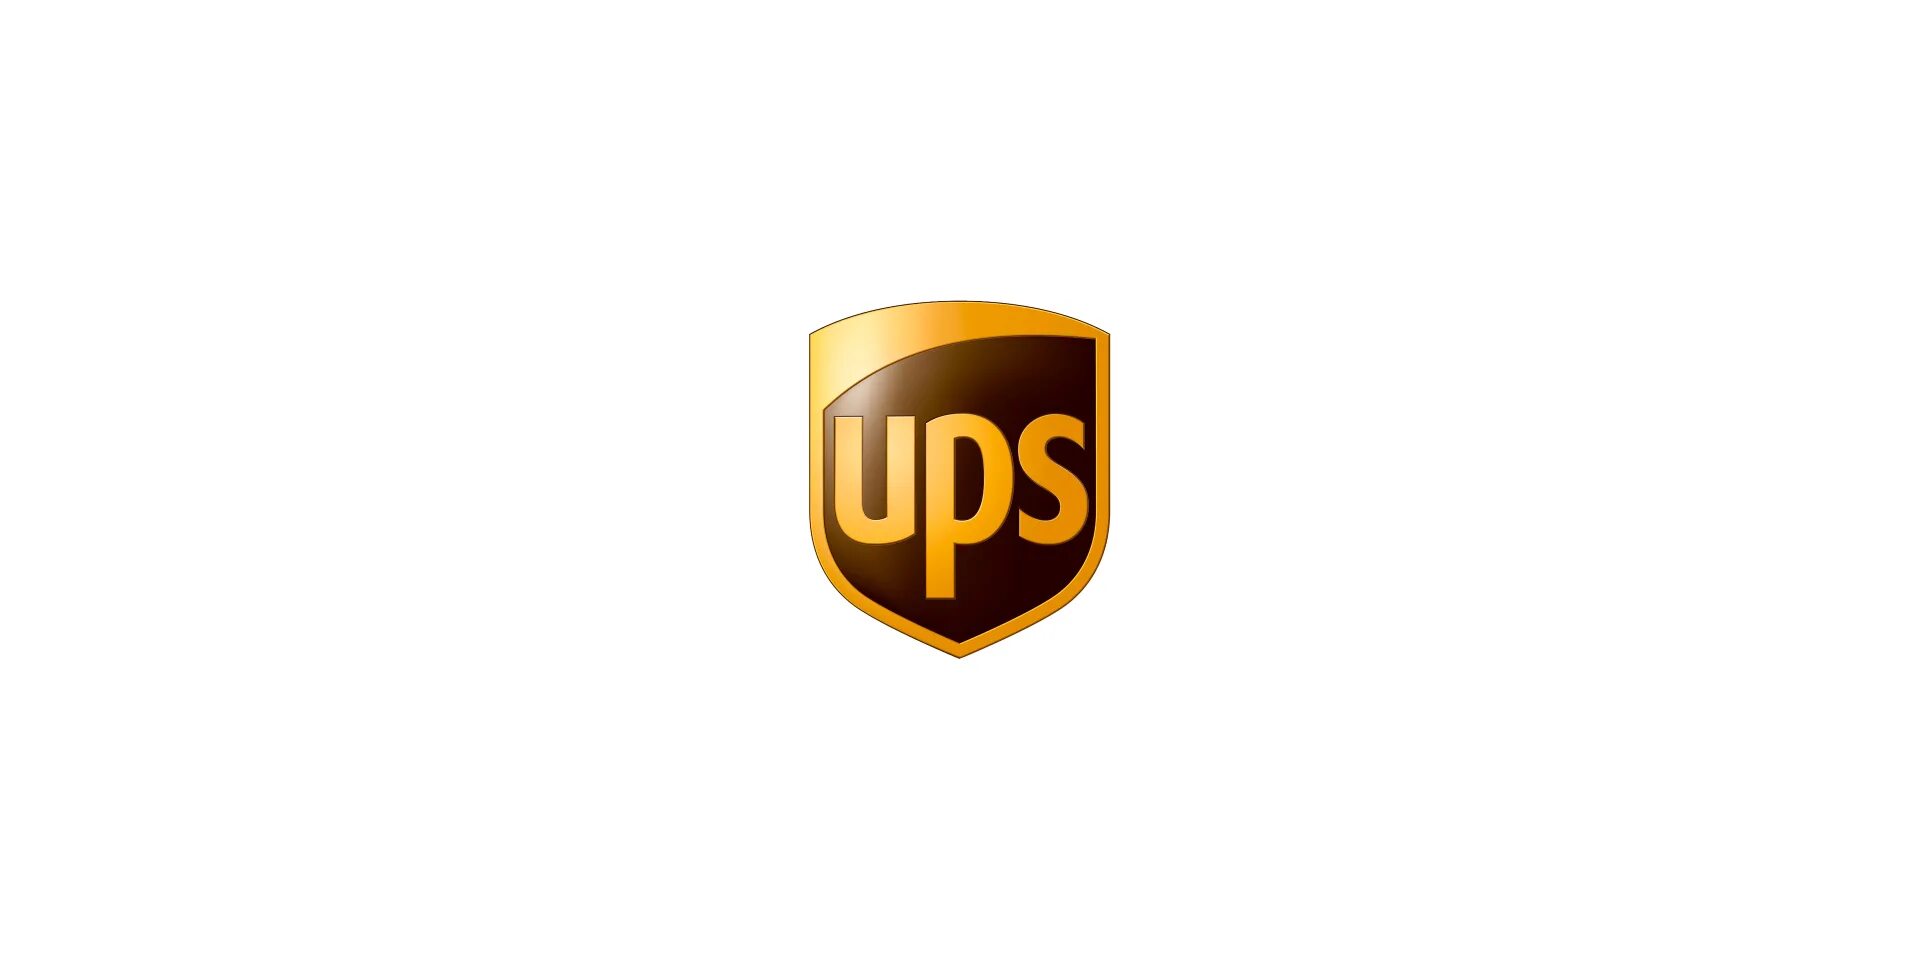 Ups logo. Ups logo PNG. Ups фирменный знак. United parcel service логотип. Ups bank